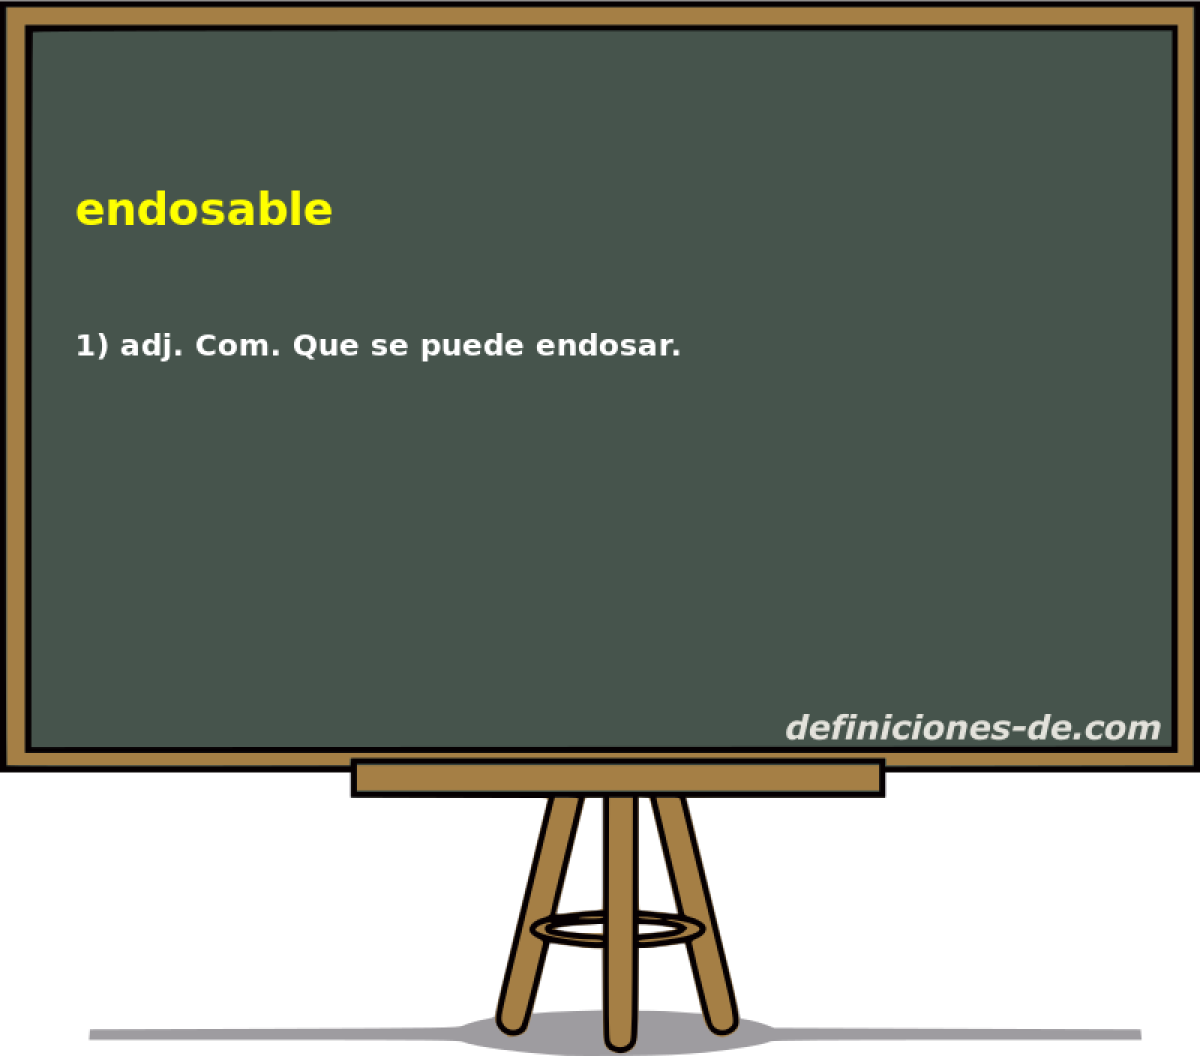 endosable 